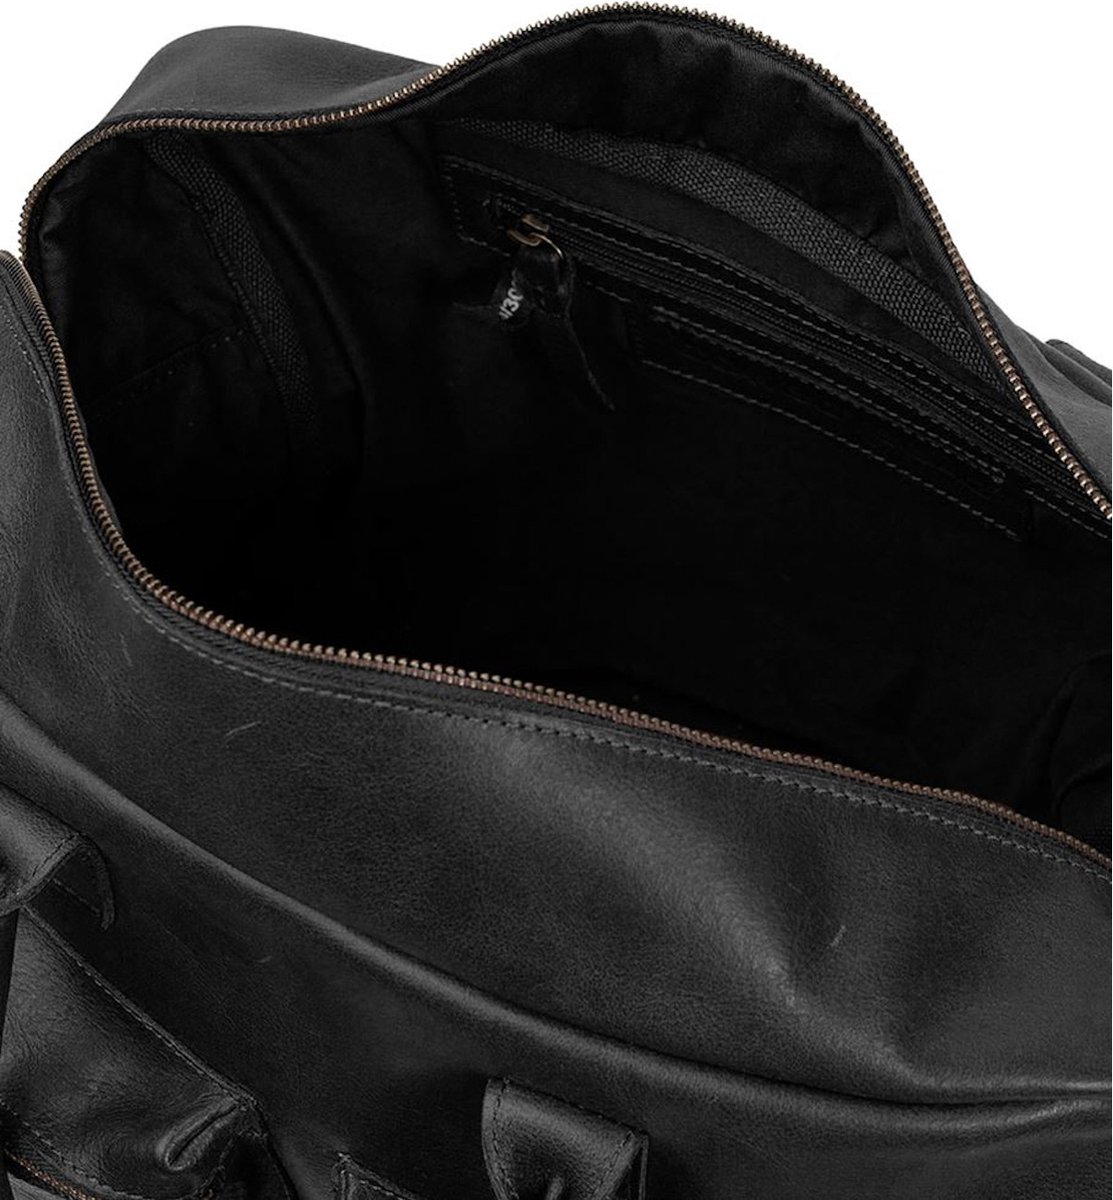 Cowboysbag - Handtassen - The Bag Special - Black | bol.com